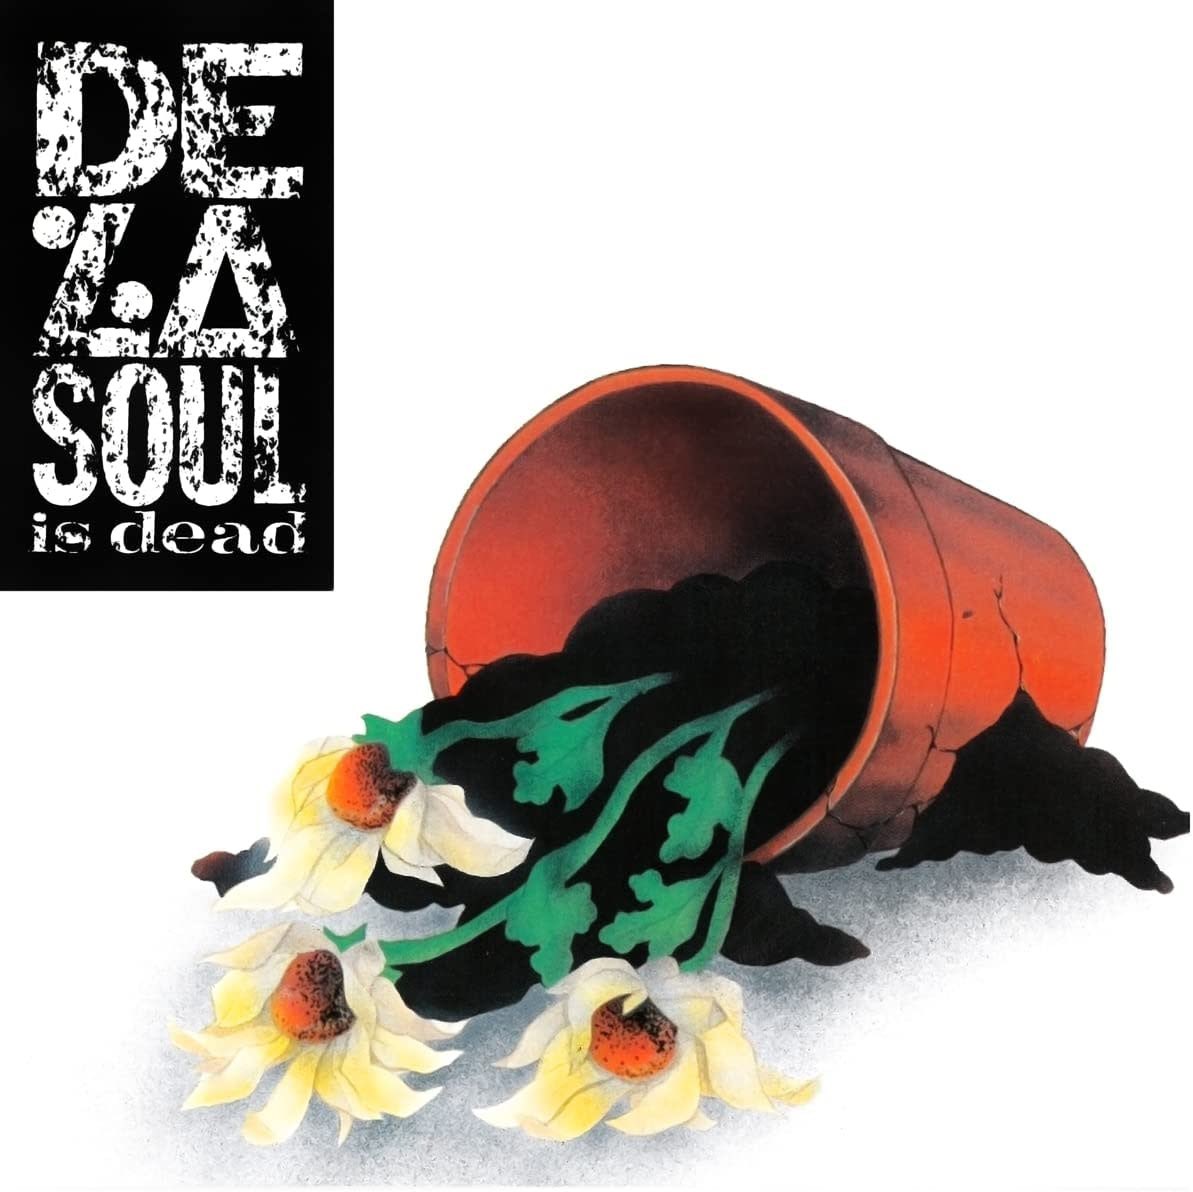 Now In Stock: De La Soul Is Dead 2LP.

#delasoul #delasoulisdead #chrysalisrecords #mindbombrecords #stcatharines #lovestc